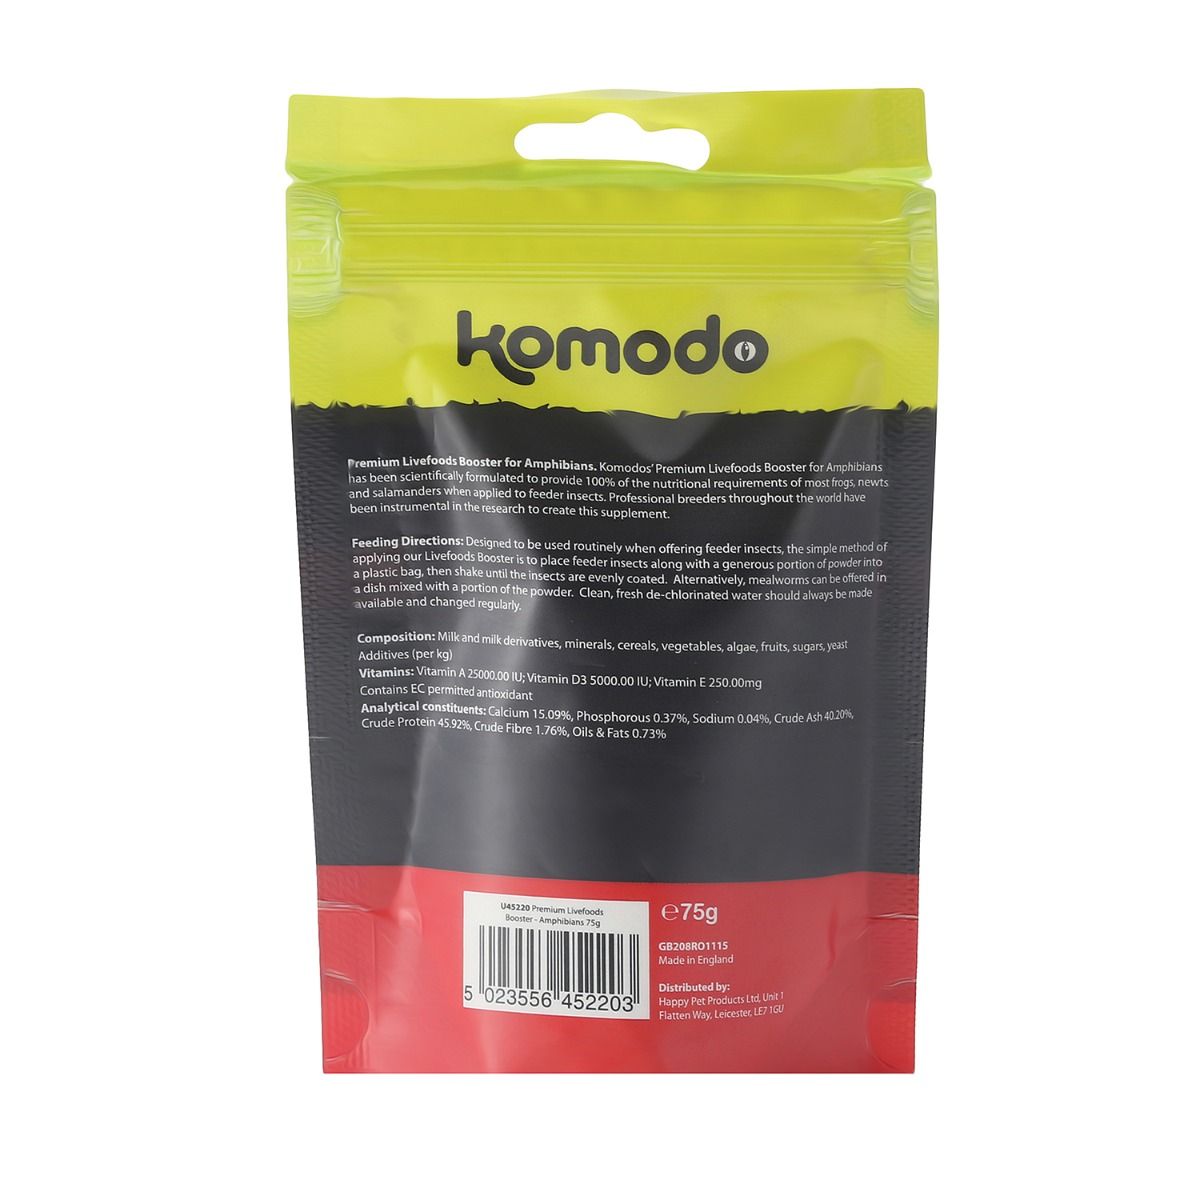 Komodo Premium Amphibian IDP 75g